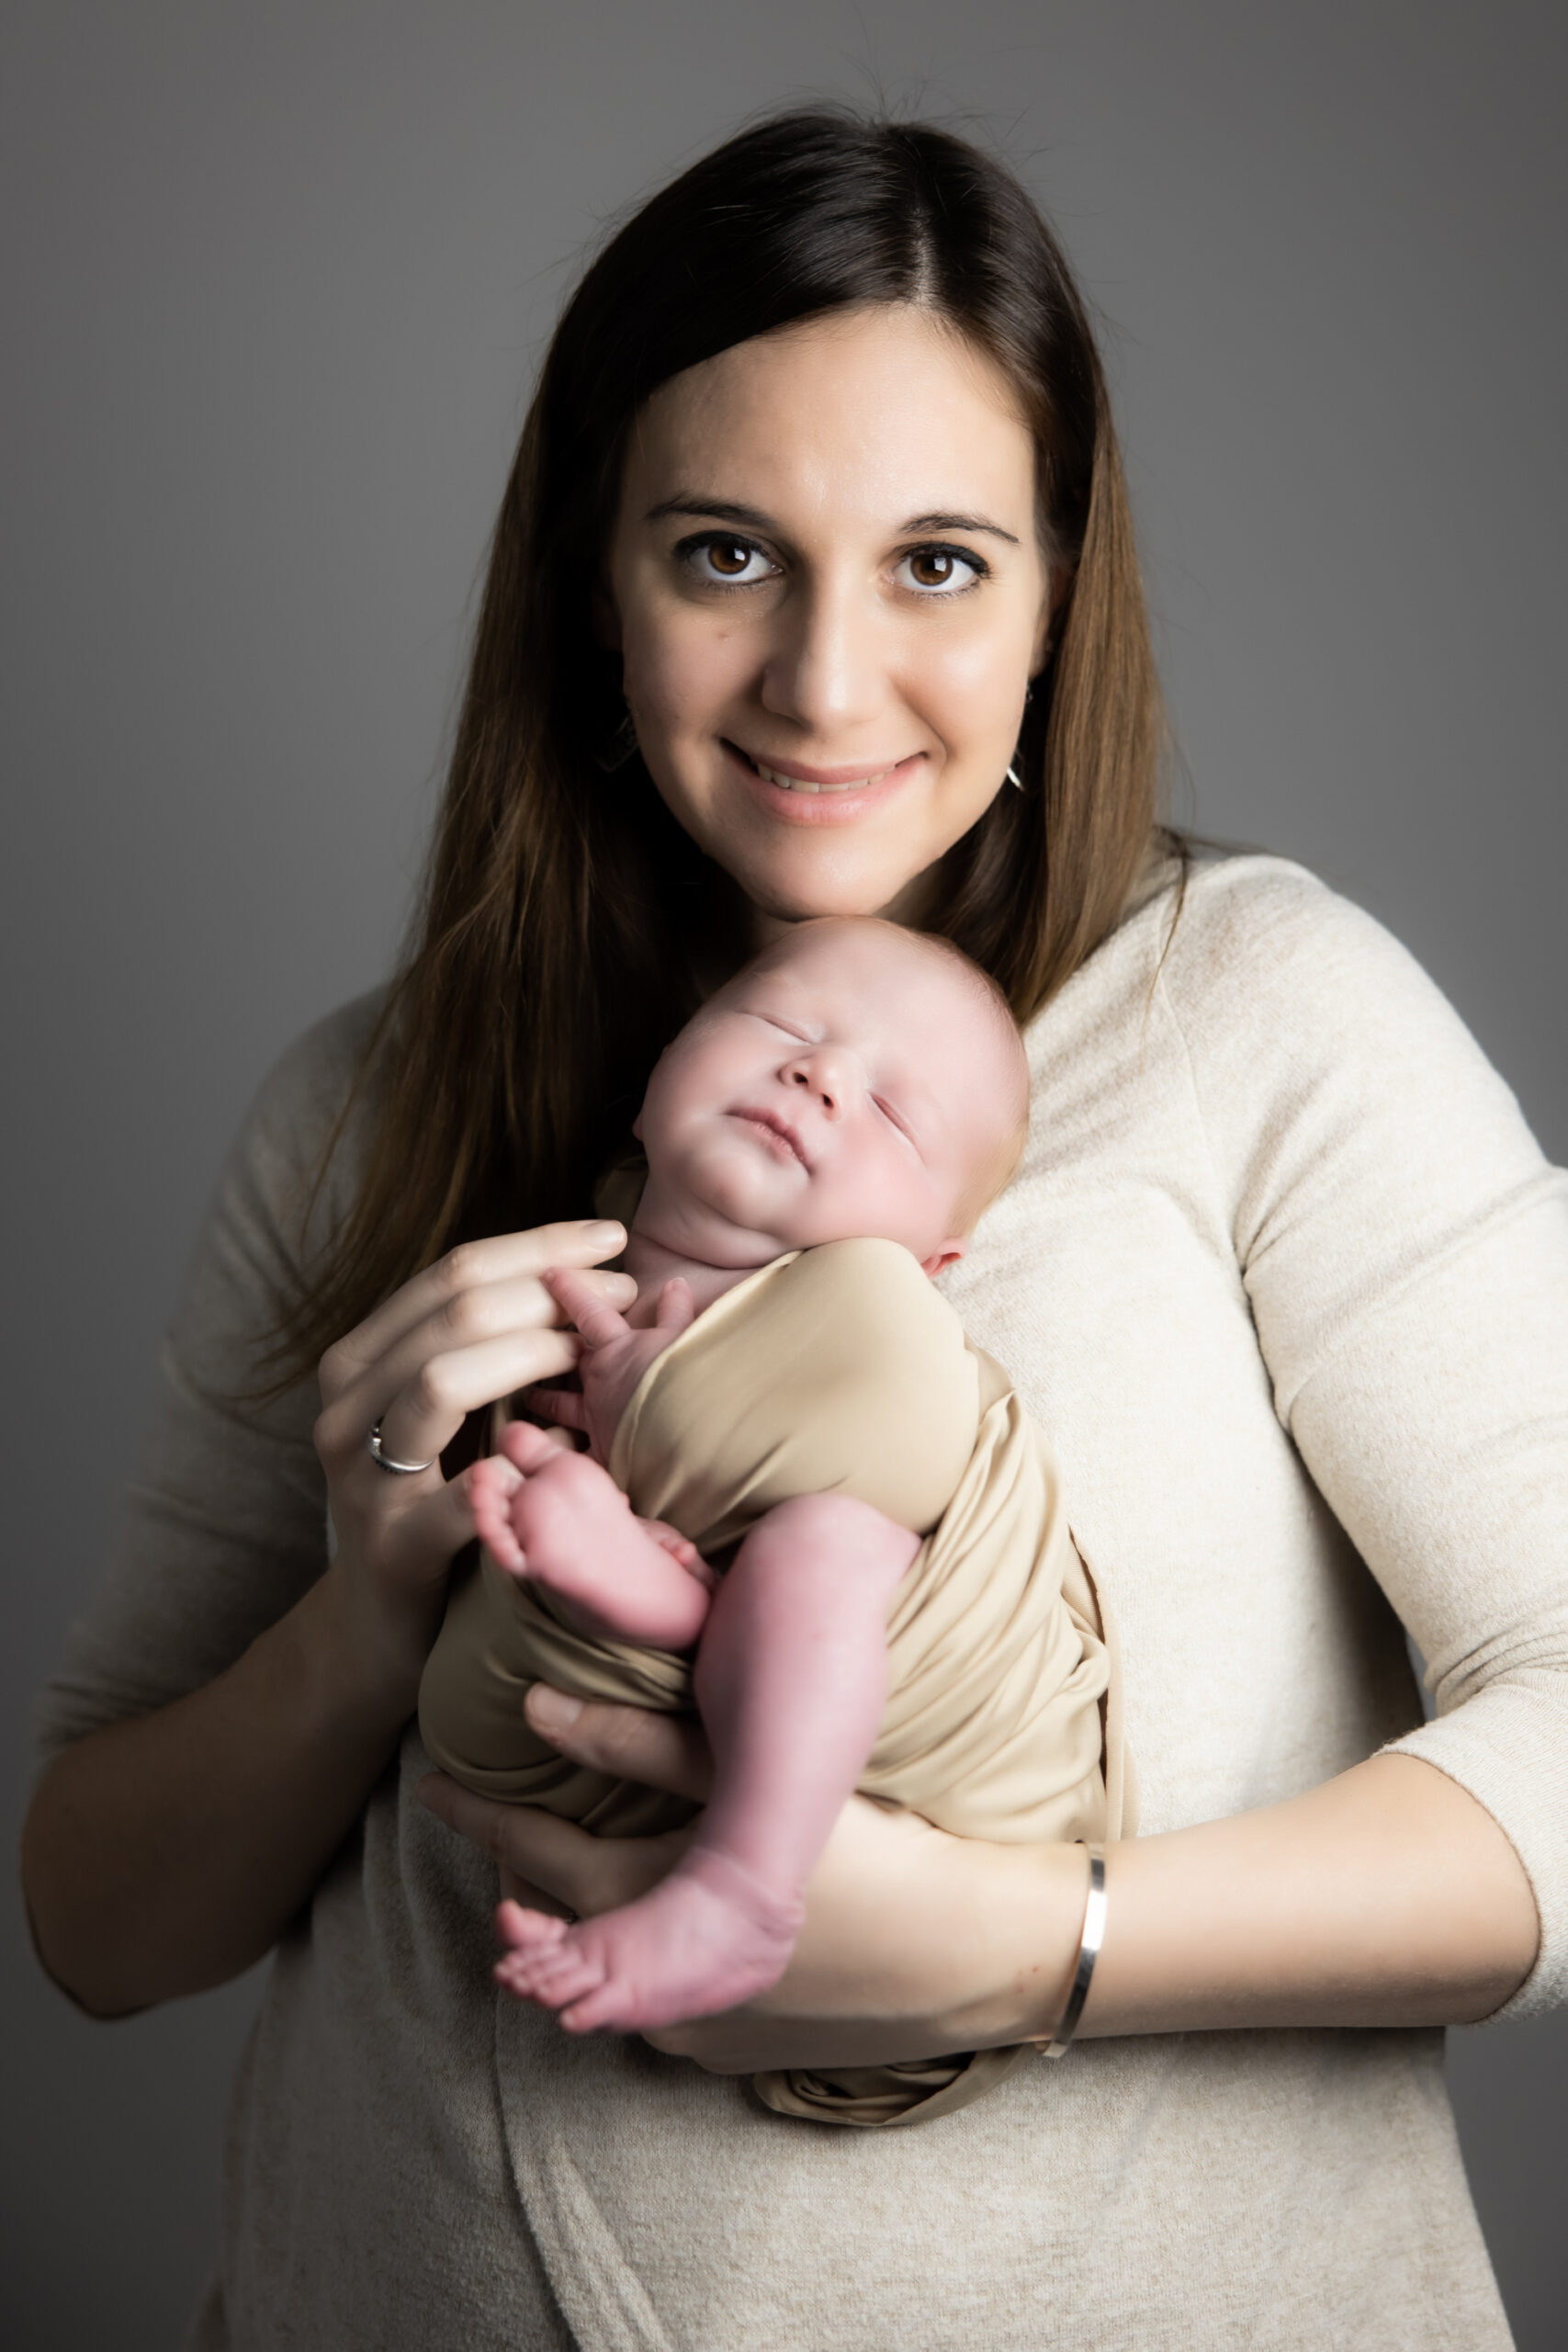 BeauvoirPhotographie chambery photographe portrait mum mumtobe baby bebe nouveaune 01 scaled